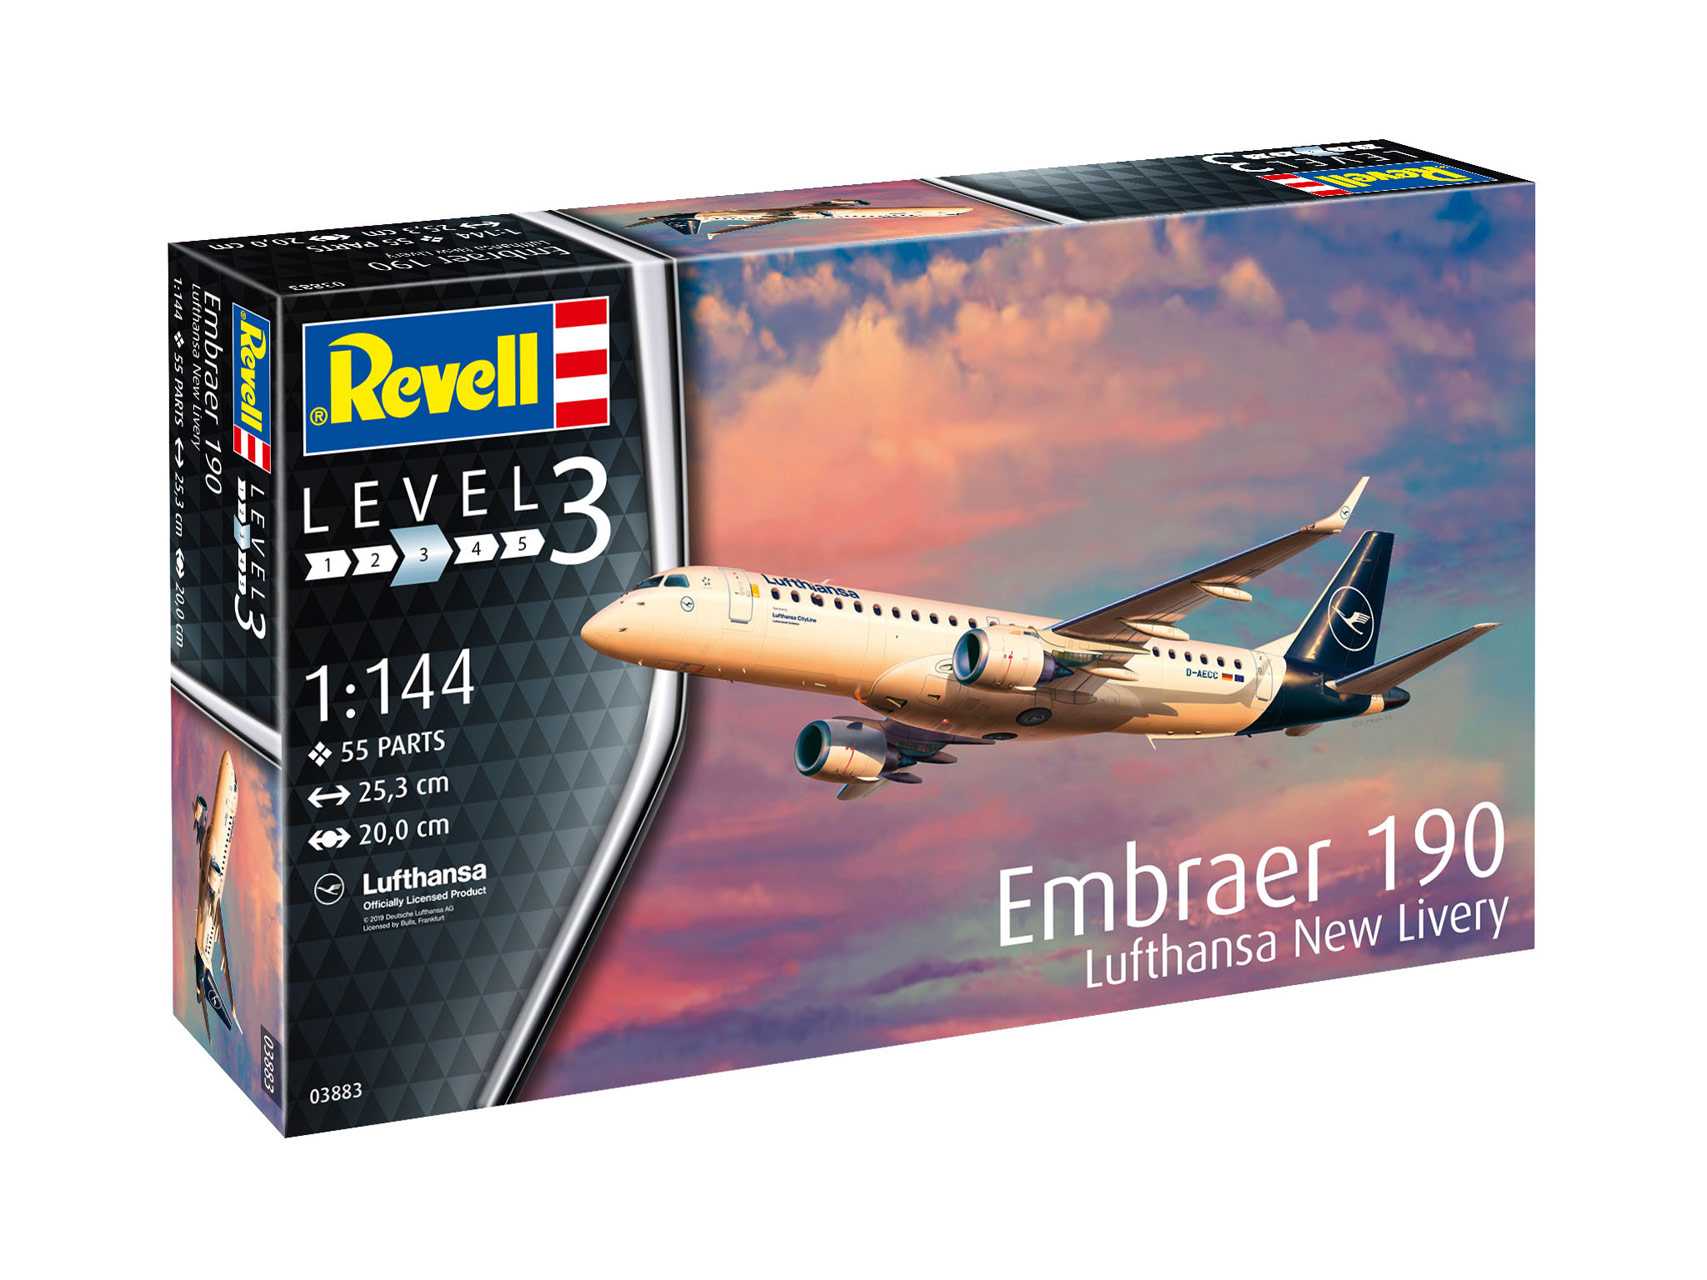 Fotografie Plastic ModelKit letadlo 03883 - Embraer 190 Lufthansa New Livery (1:144)